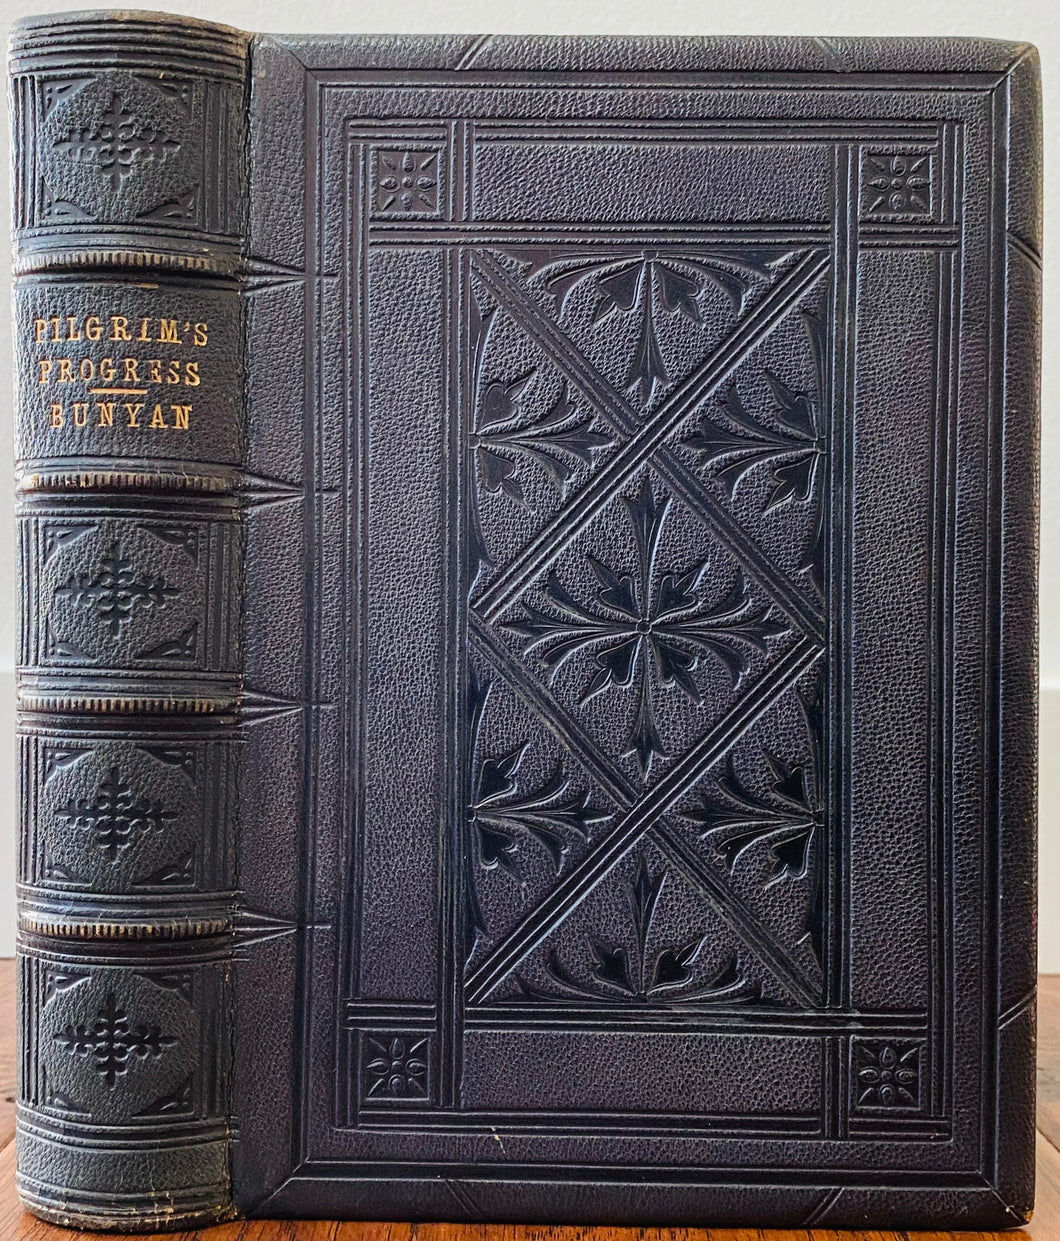 1857 JOHN BUNYAN. Fine Binding, Tooled Foredge Binding Edition of Pilgrim's Progress!